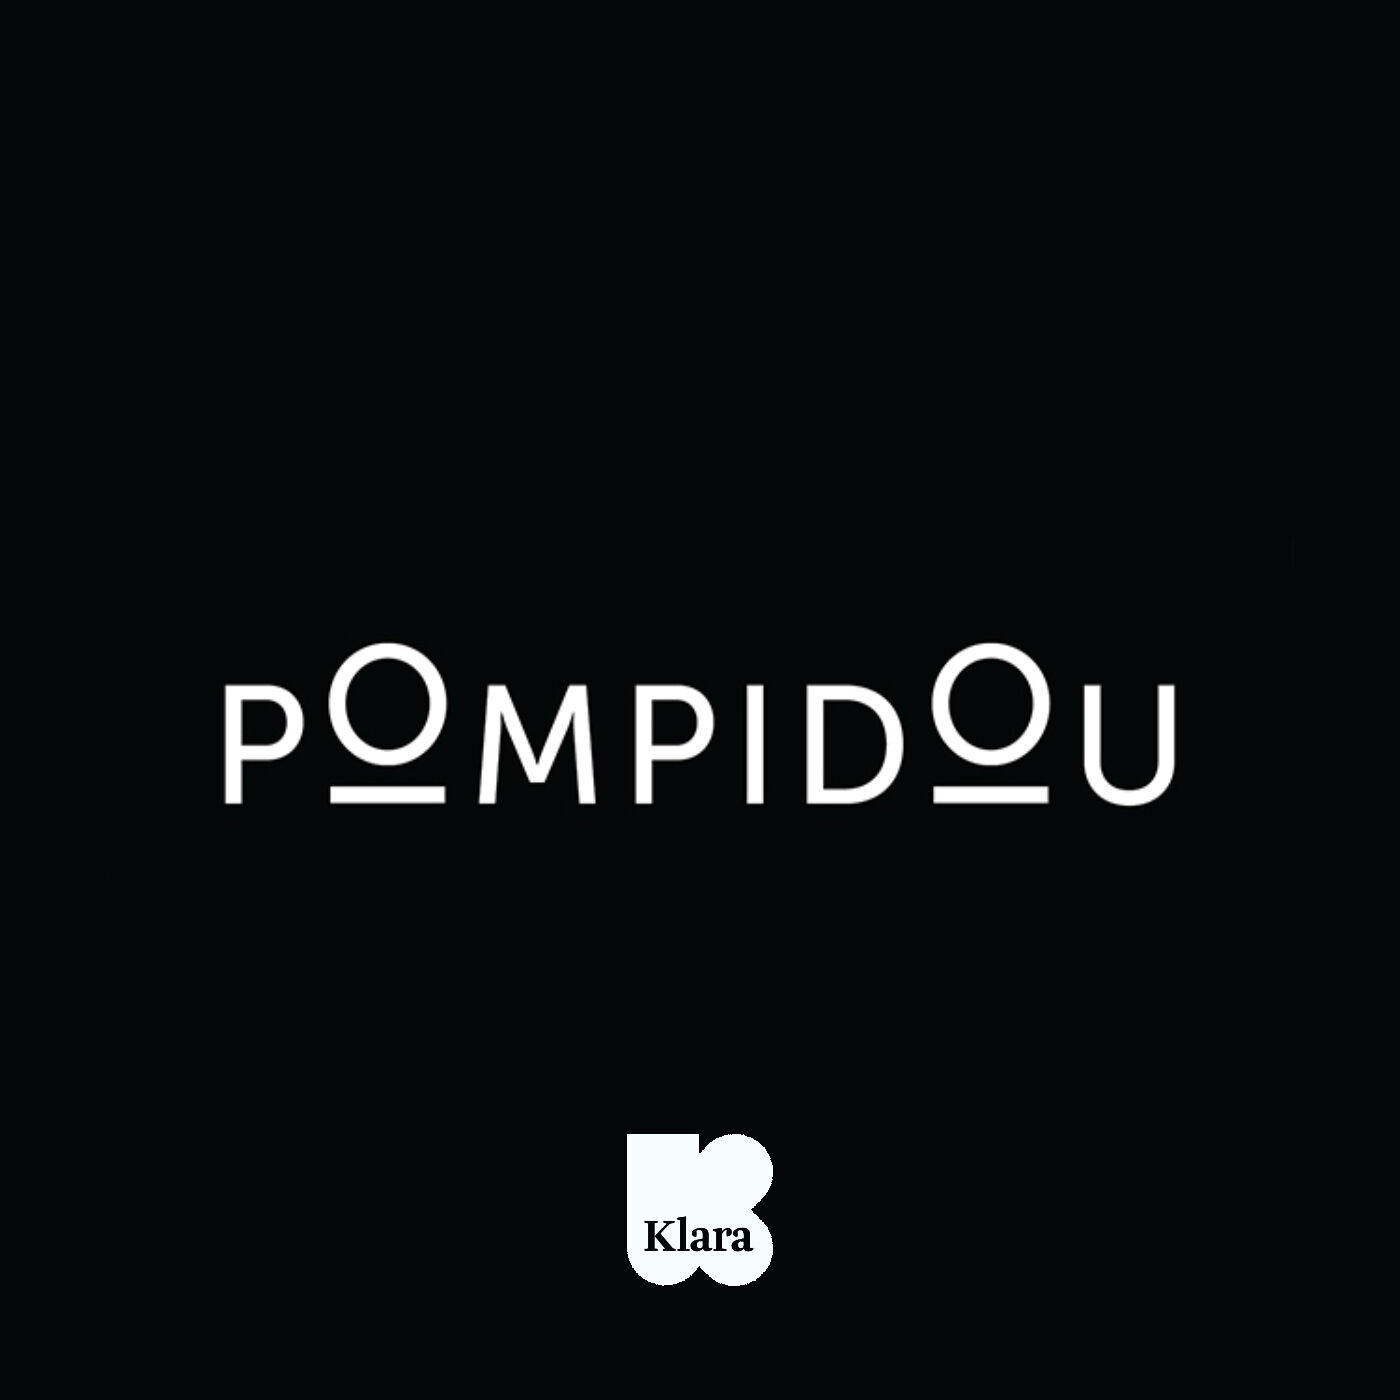 Pompidou logo